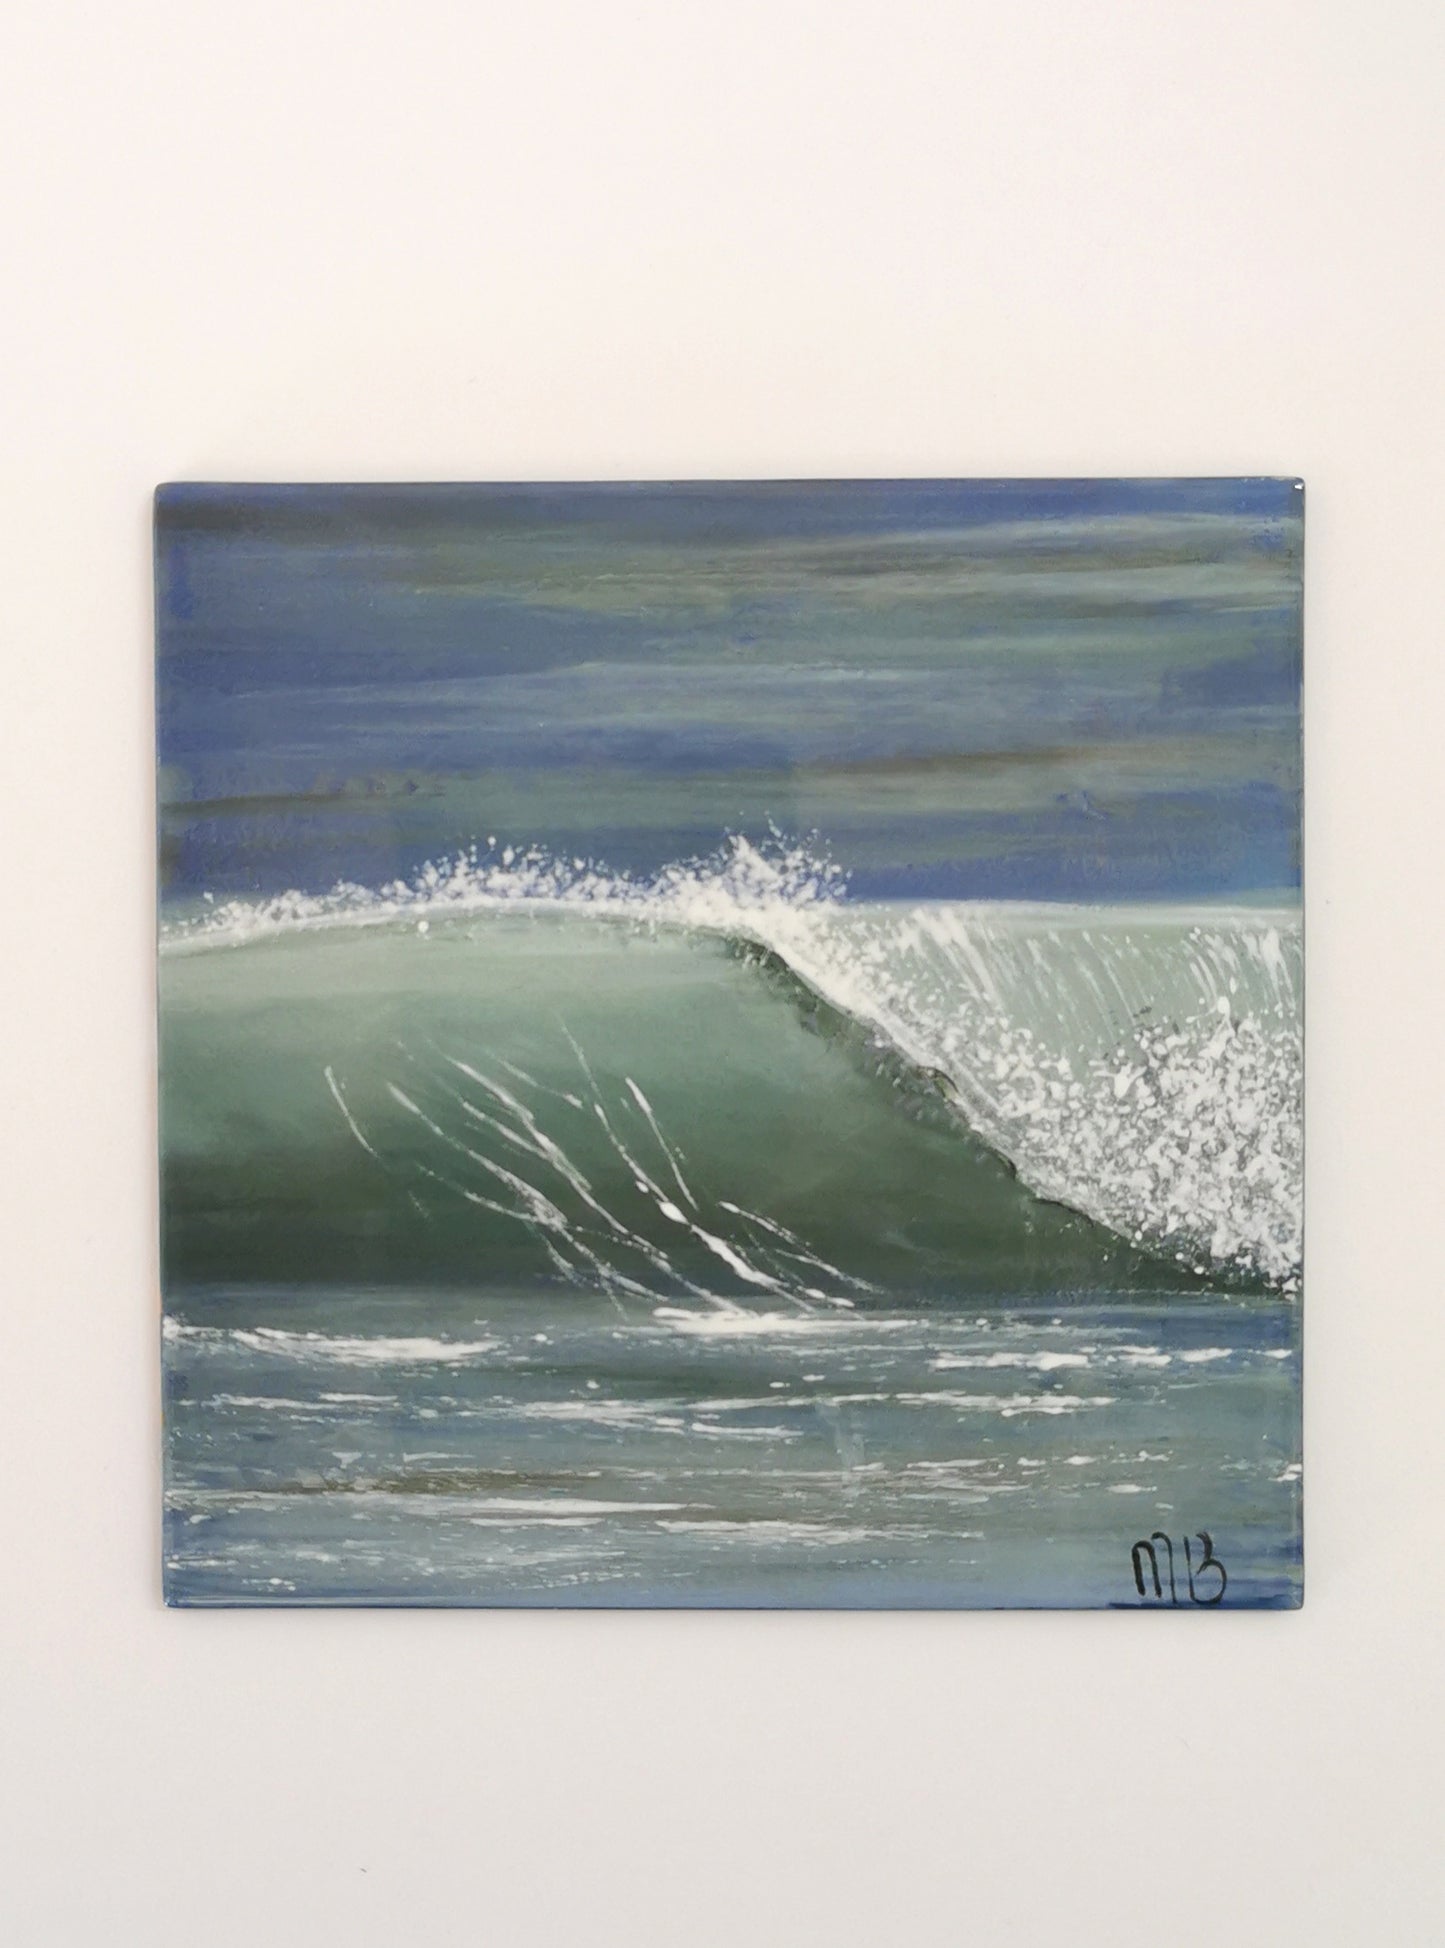 Cresting Waves: Fused Glass Seascape Painting Workshop (1-day) Workshop